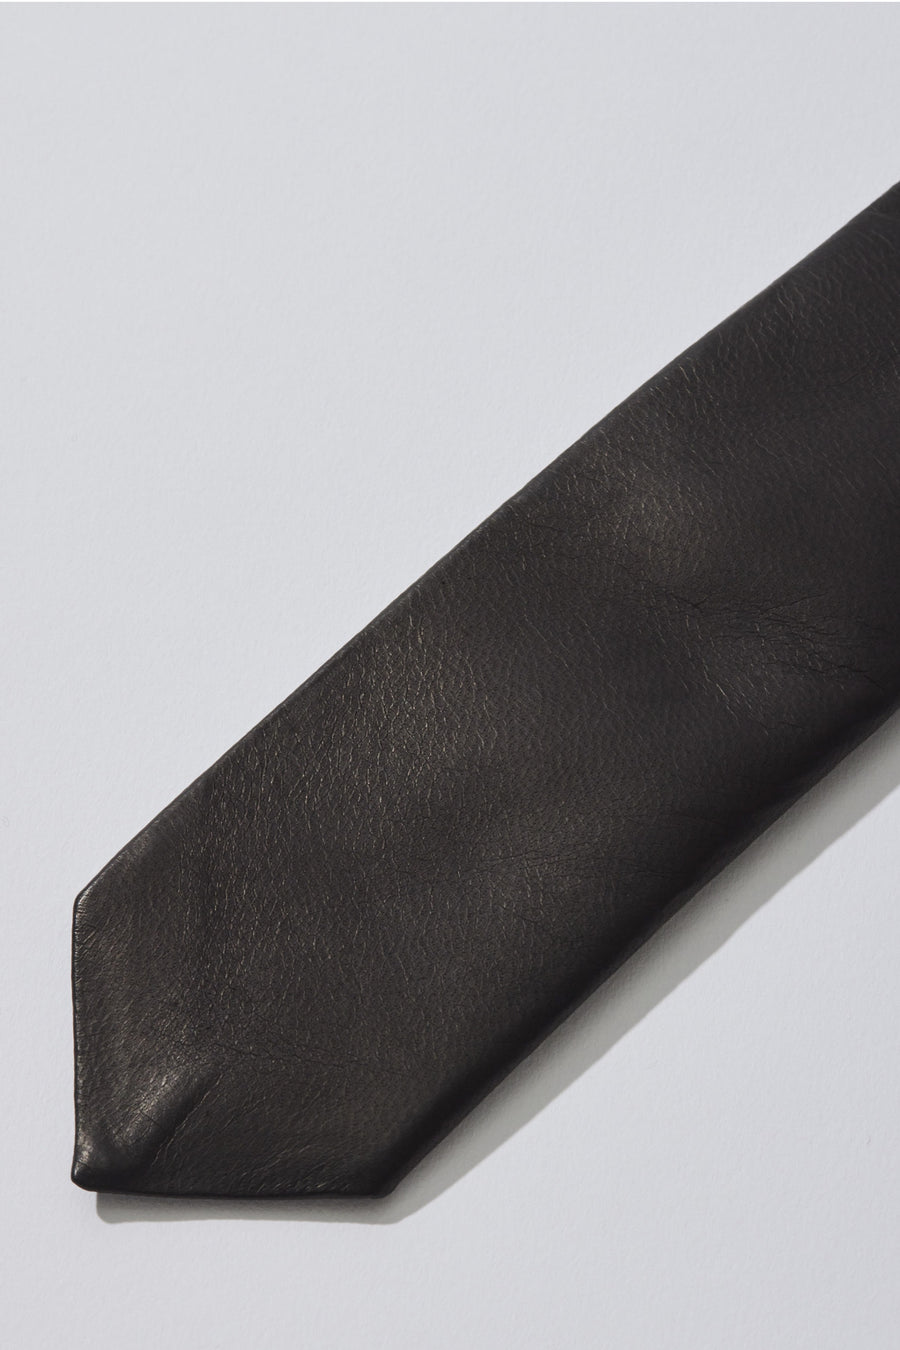 LITTLEBIG  Leather Narrow Tie